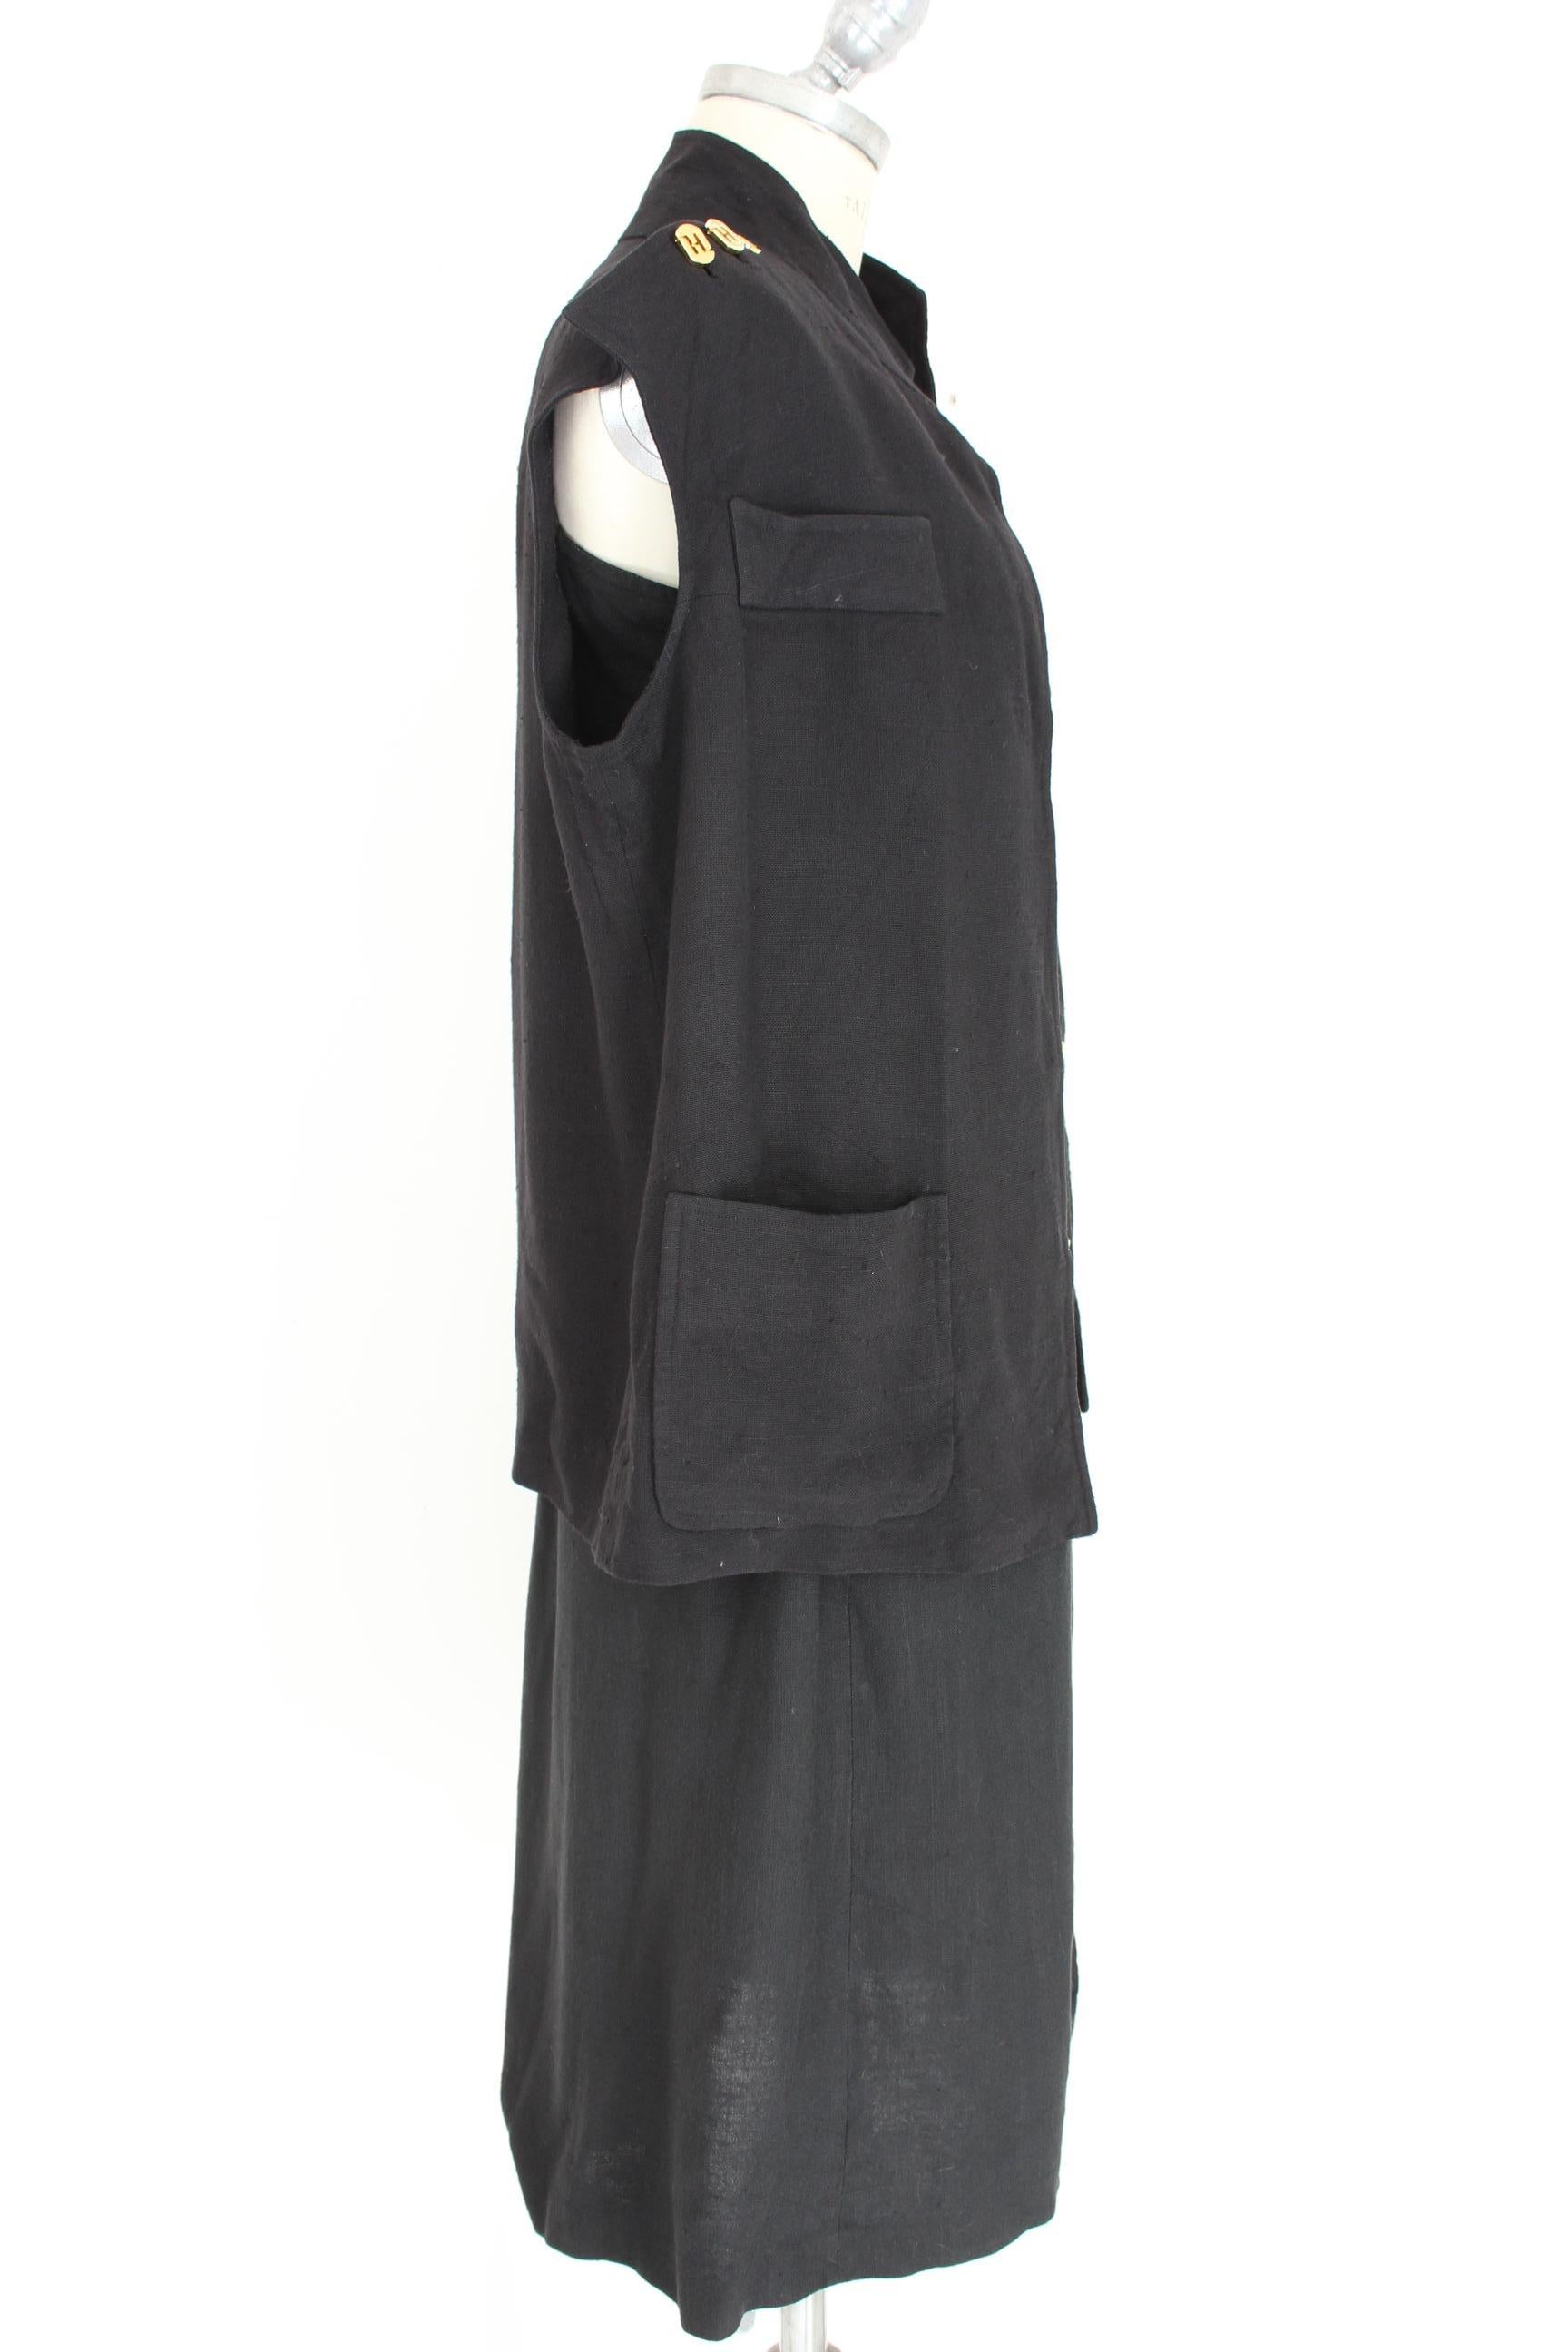 Salvatore Ferragamo Black Cocktail Suit Dress 1990s In Excellent Condition For Sale In Brindisi, Bt